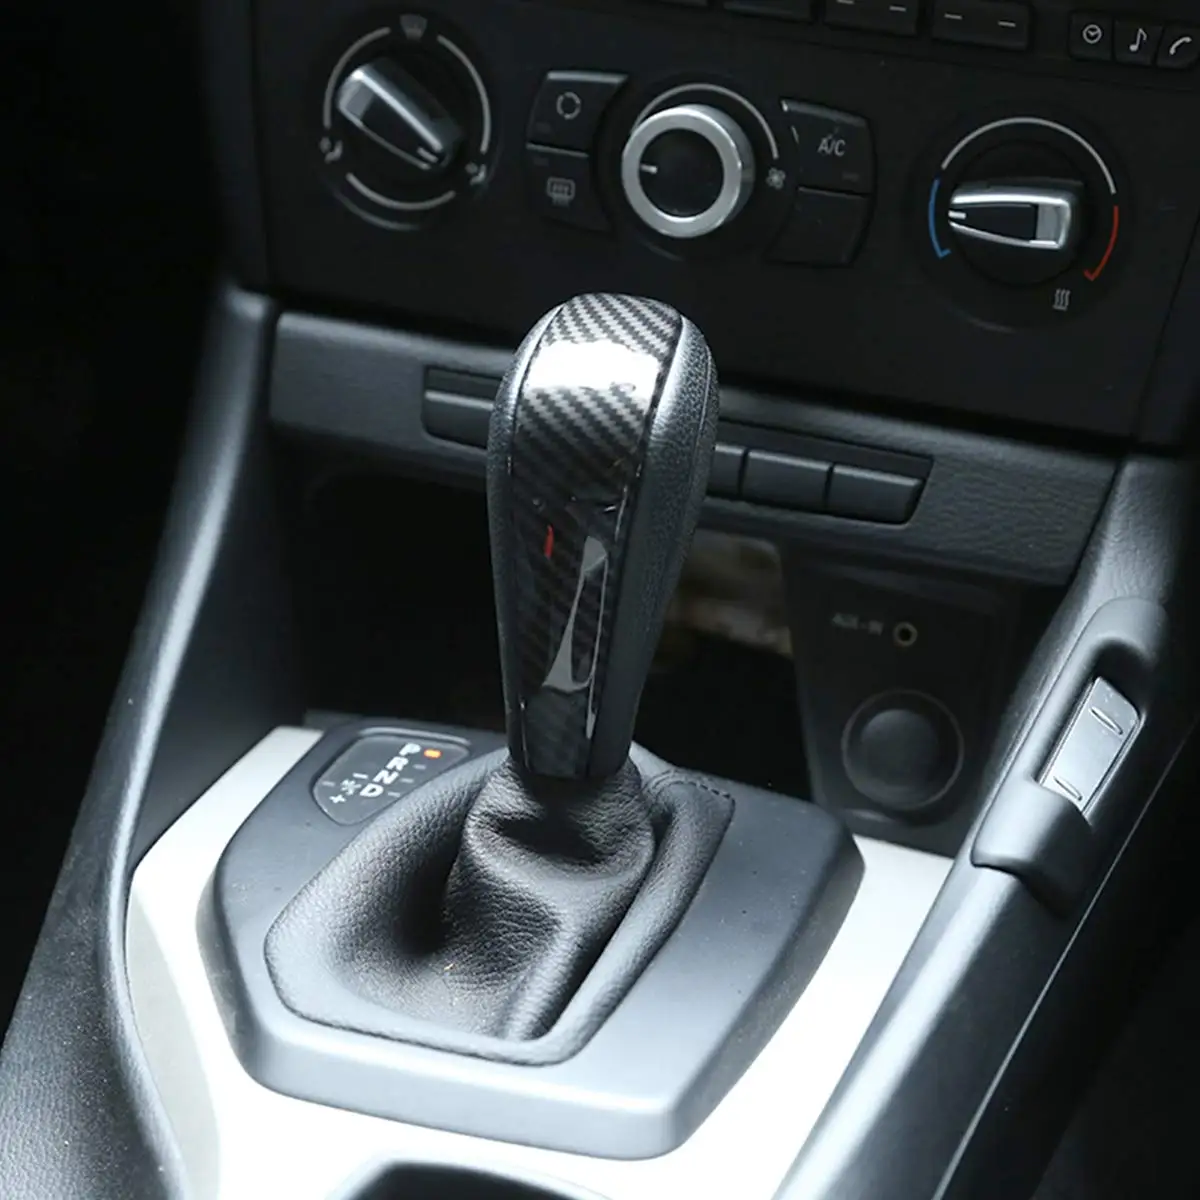 

ABS Car Center Gear Shift Head Cover Trim for BMW E48 E60 E61 E63 E64 E65 E85 E86 E83 E53 E81 E82 E87 E90 E91 E92 E93 F01 E87